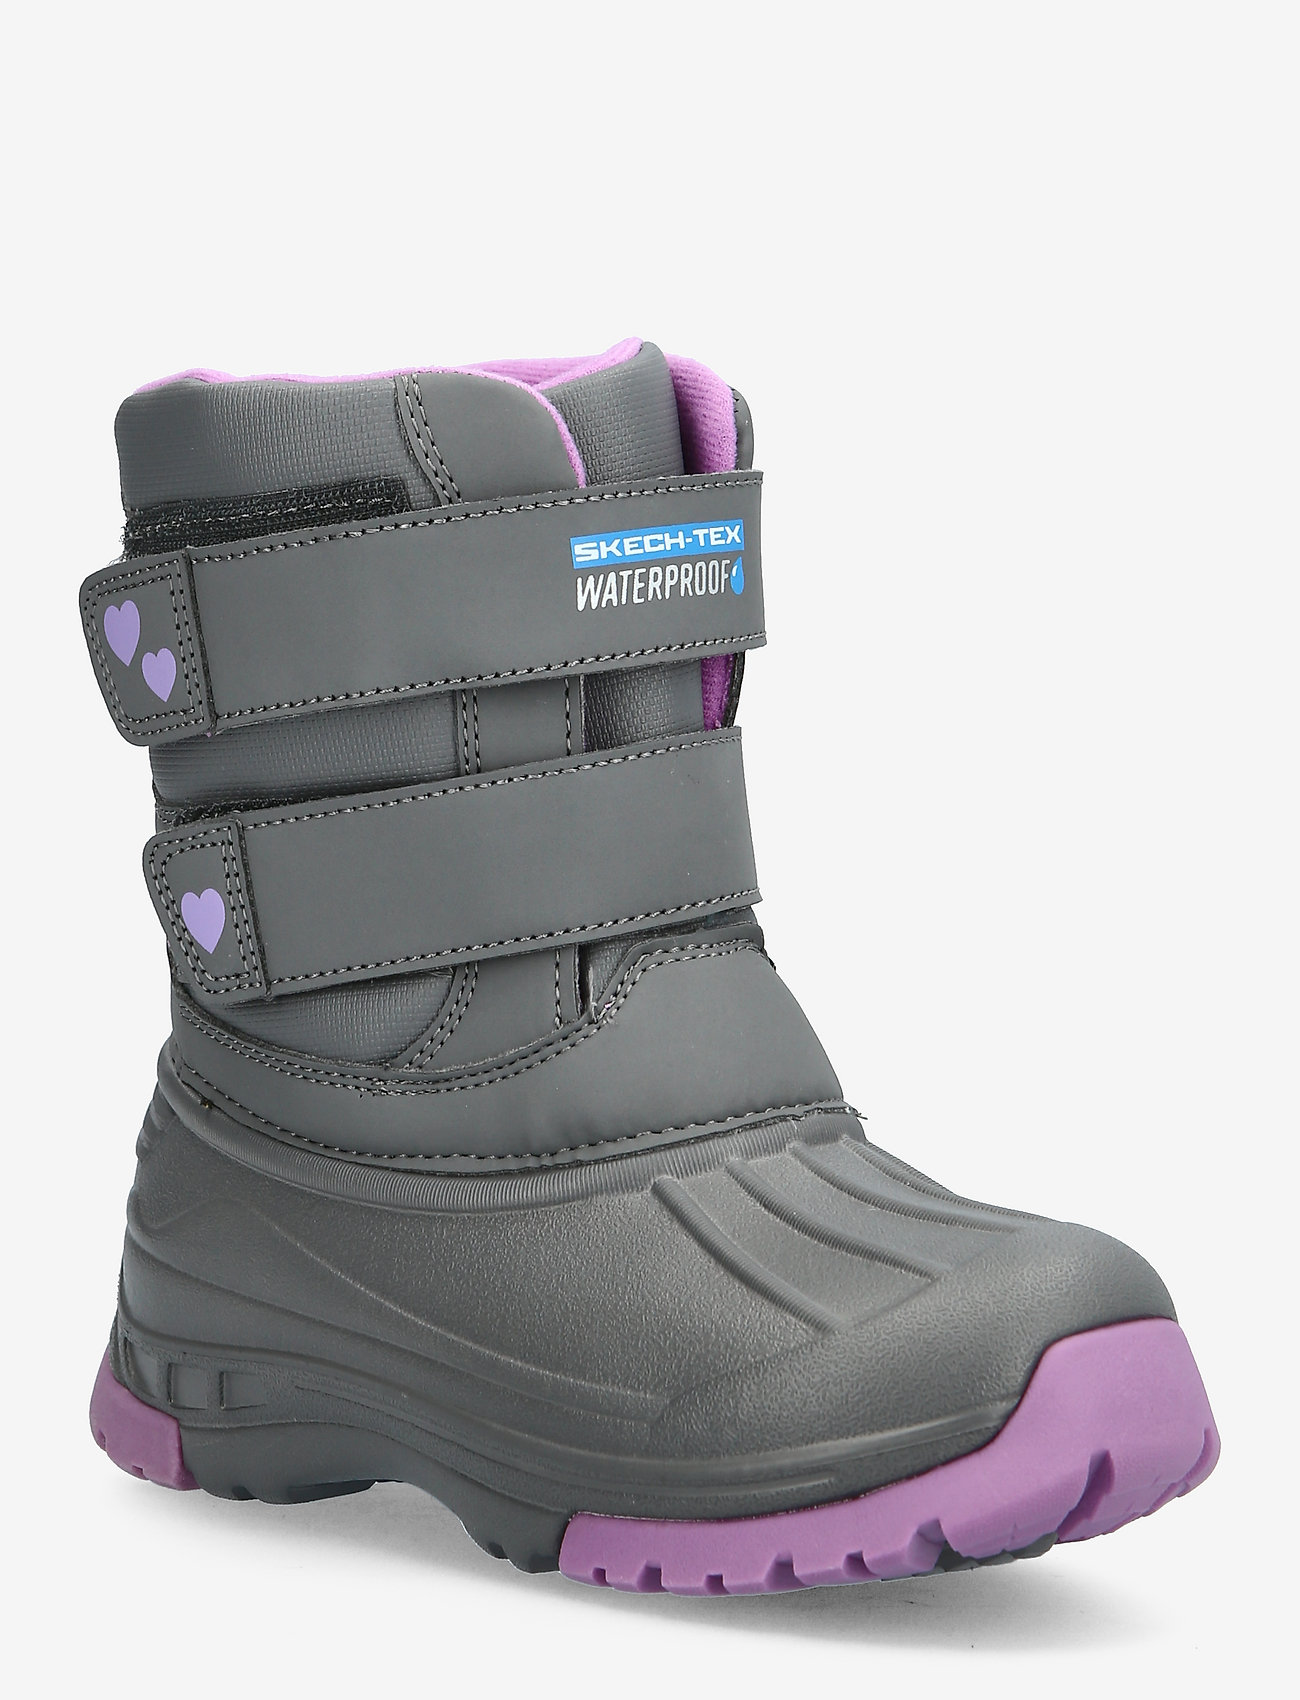 Waterproof Boots on Sale, SAVE horiconphoenix.com